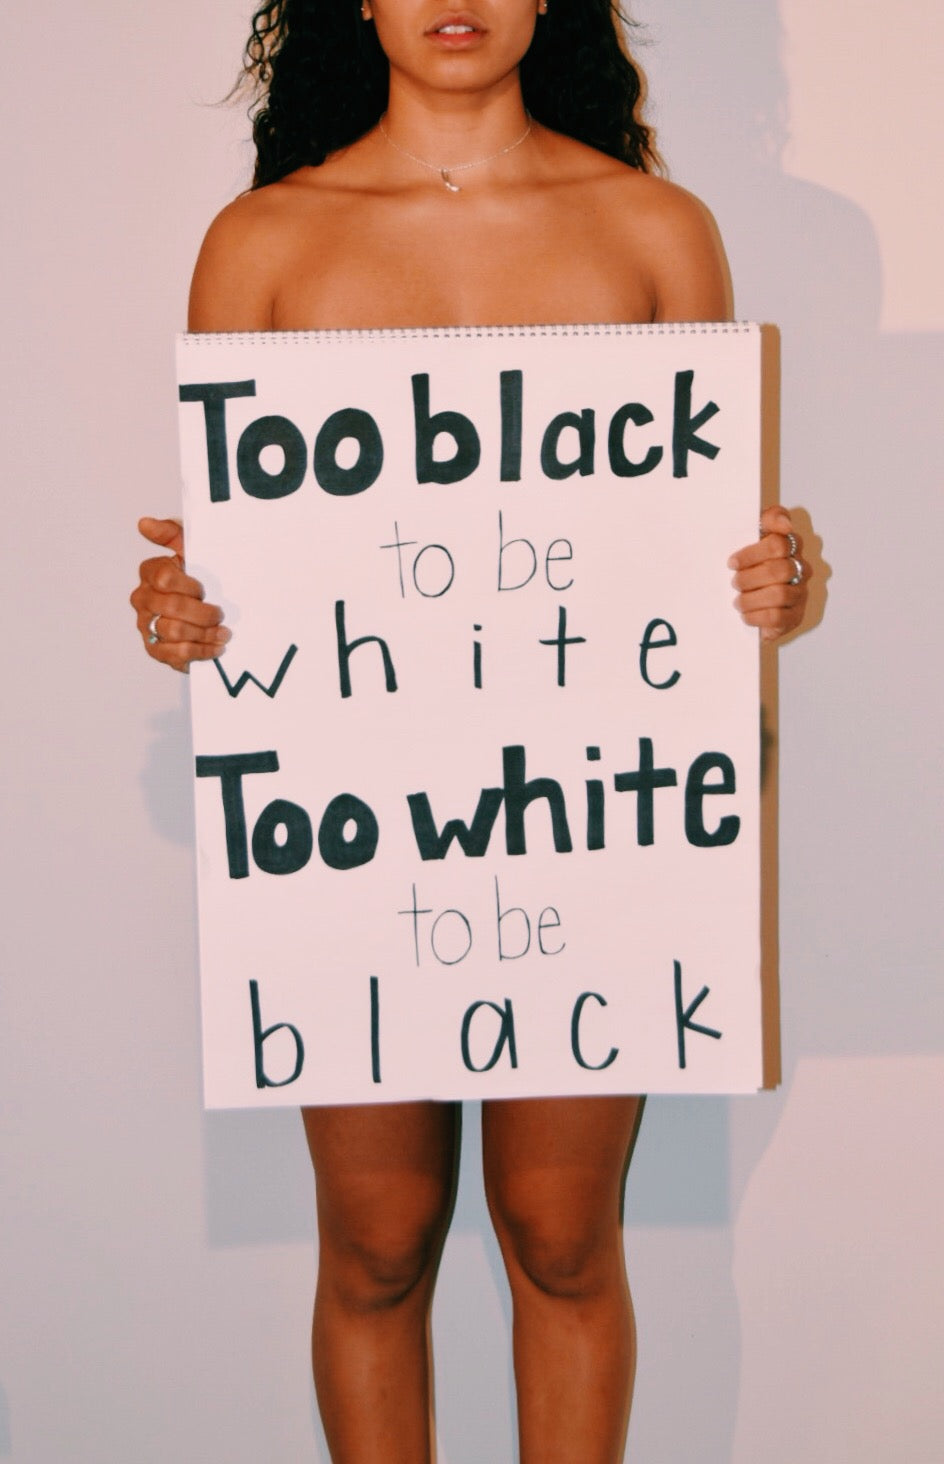 Too Black to be White. Too White to be Black.